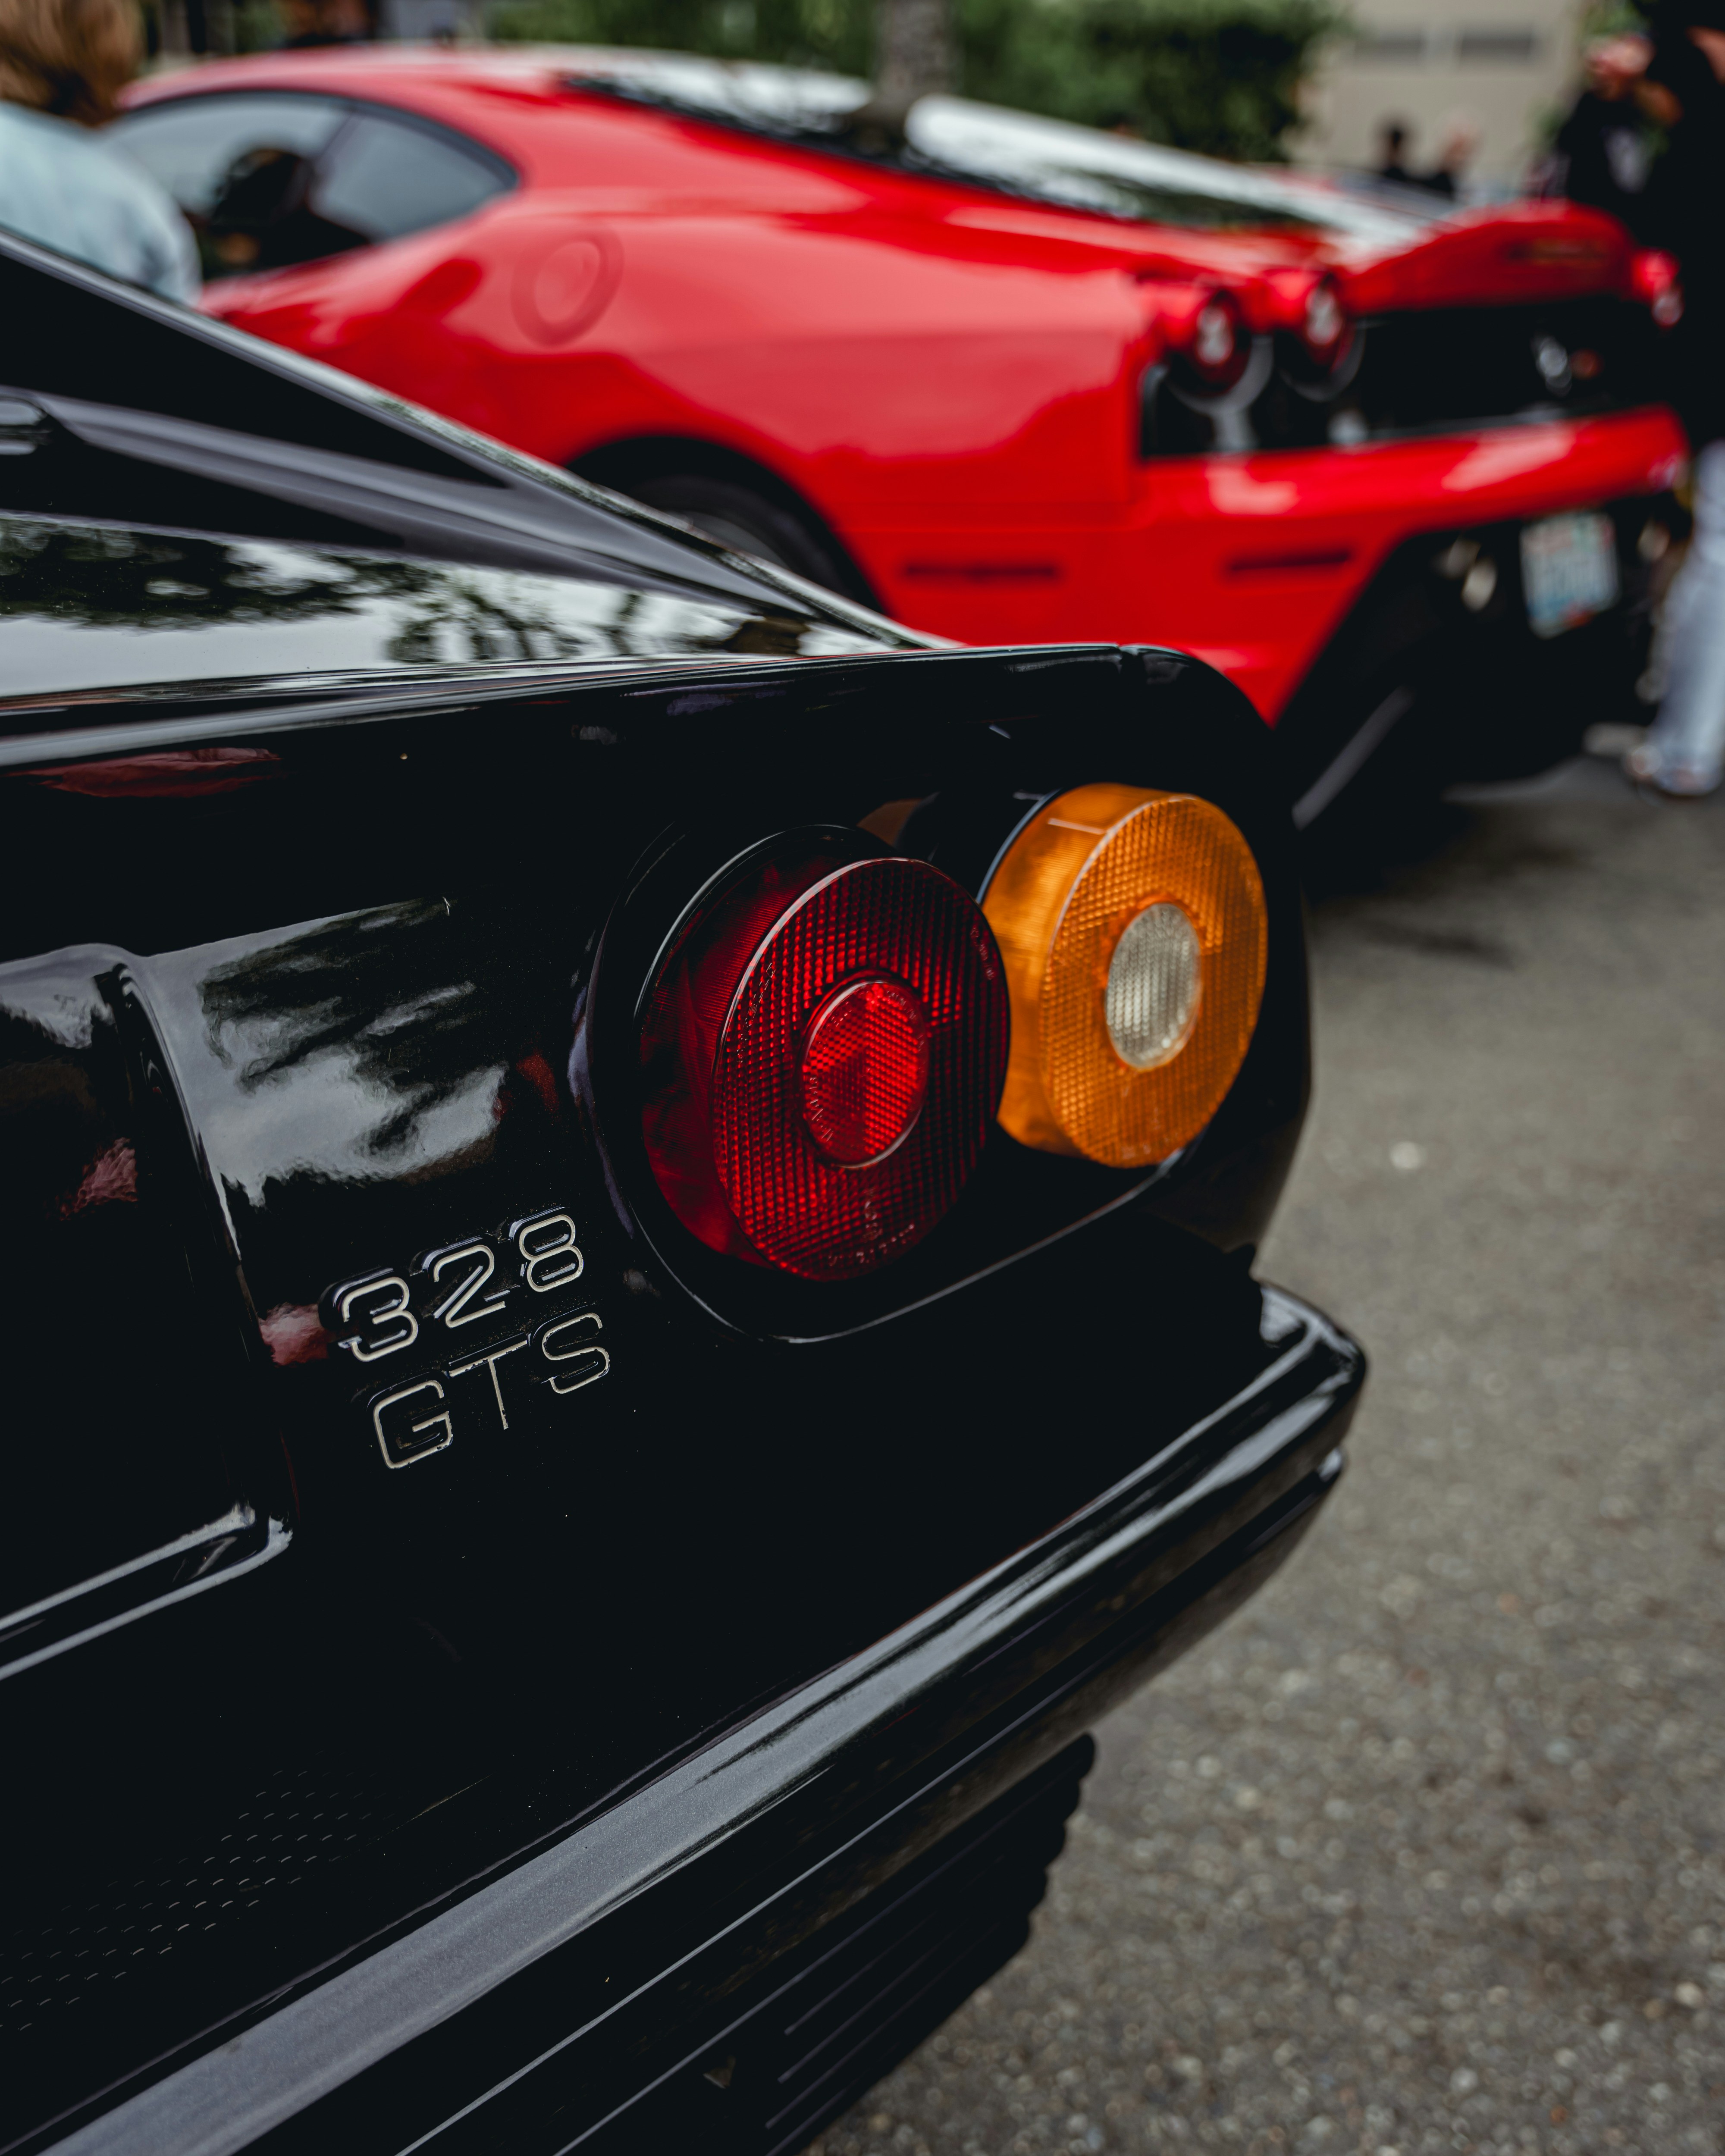 Incredible rare exotic black Ferrari 328 GTS rear back close up